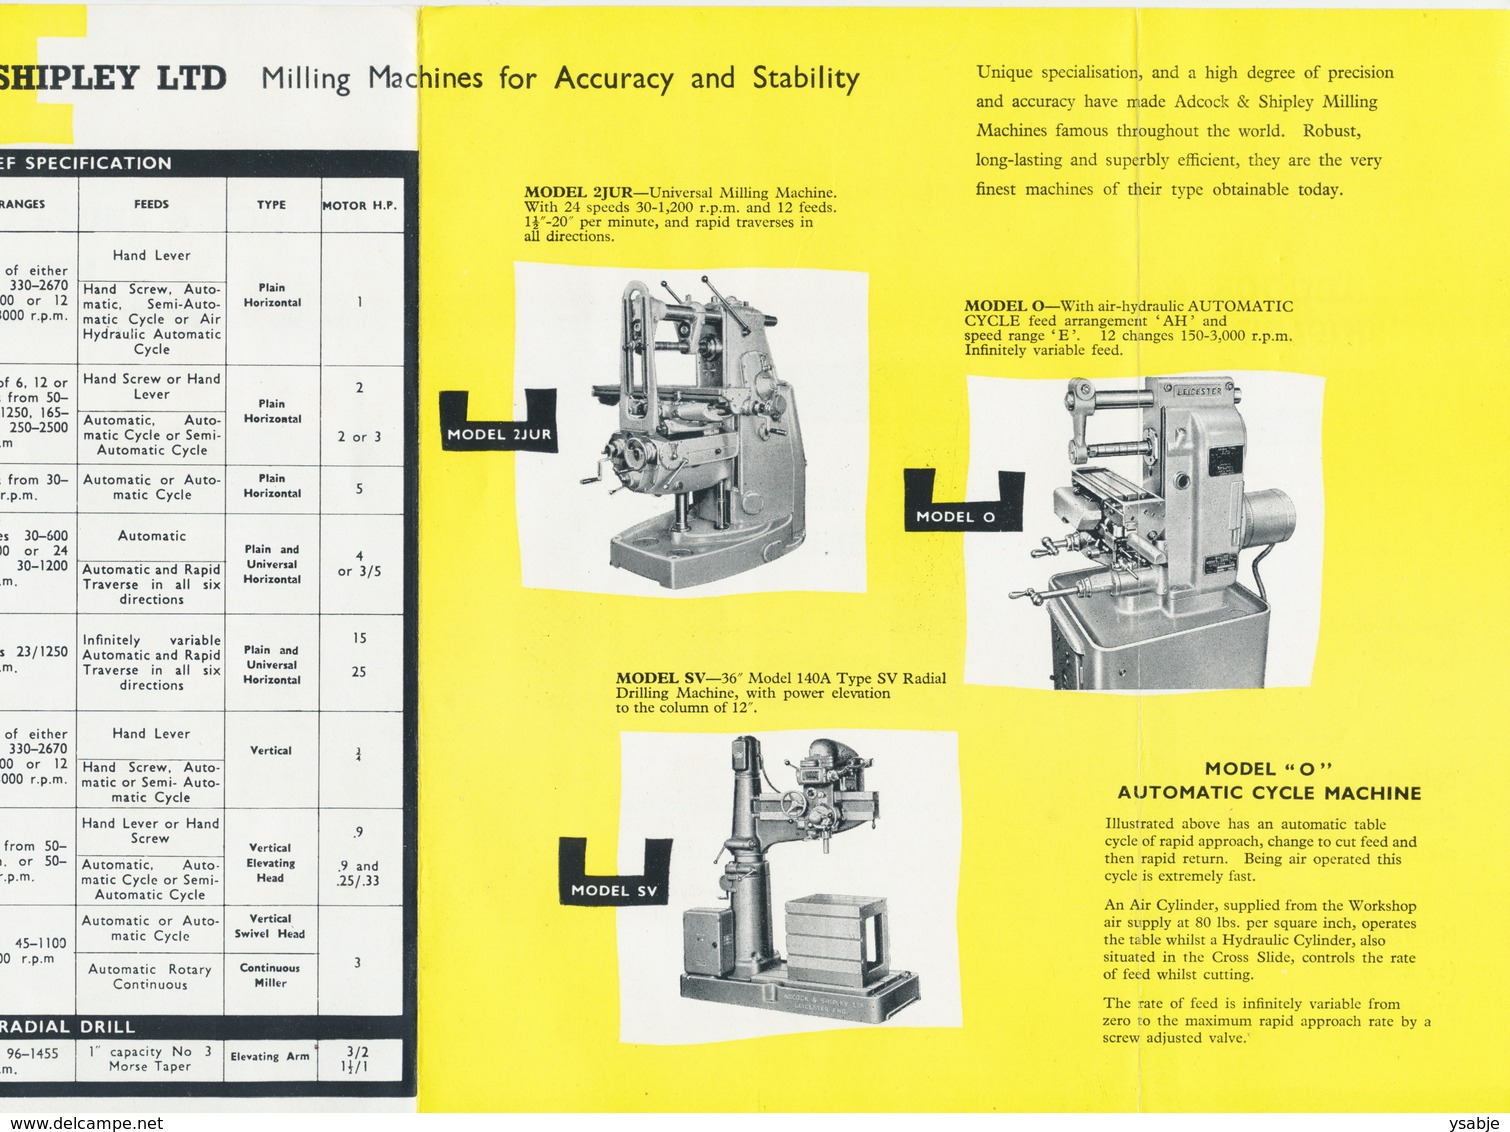 Adcock & Shipley Ltd - Milling Machines - Reclamefolder - Otros Aparatos